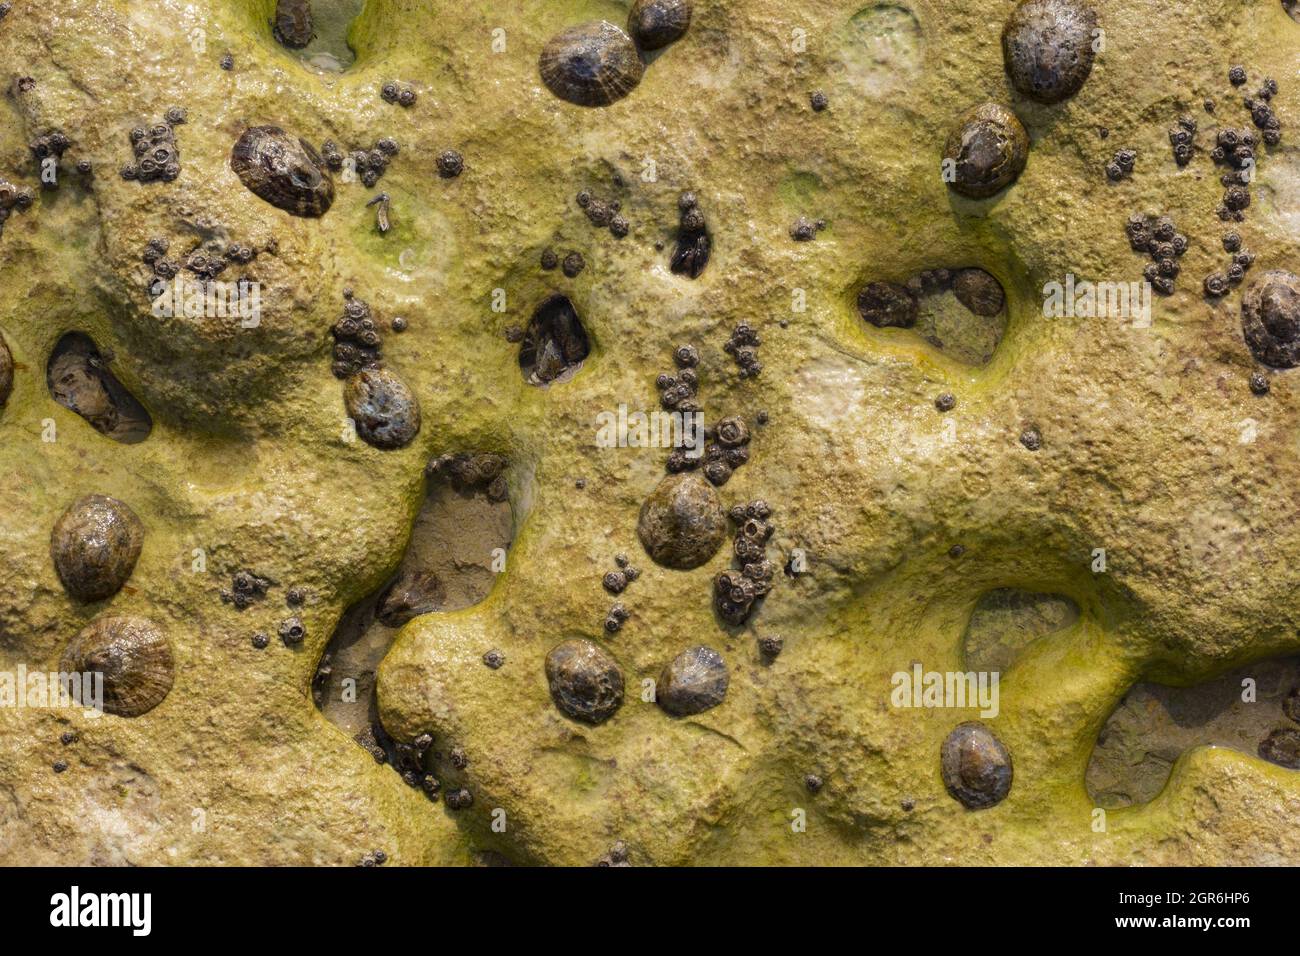 Closeup shot of arthonia vinosa for wallpaper and background Stock Photo